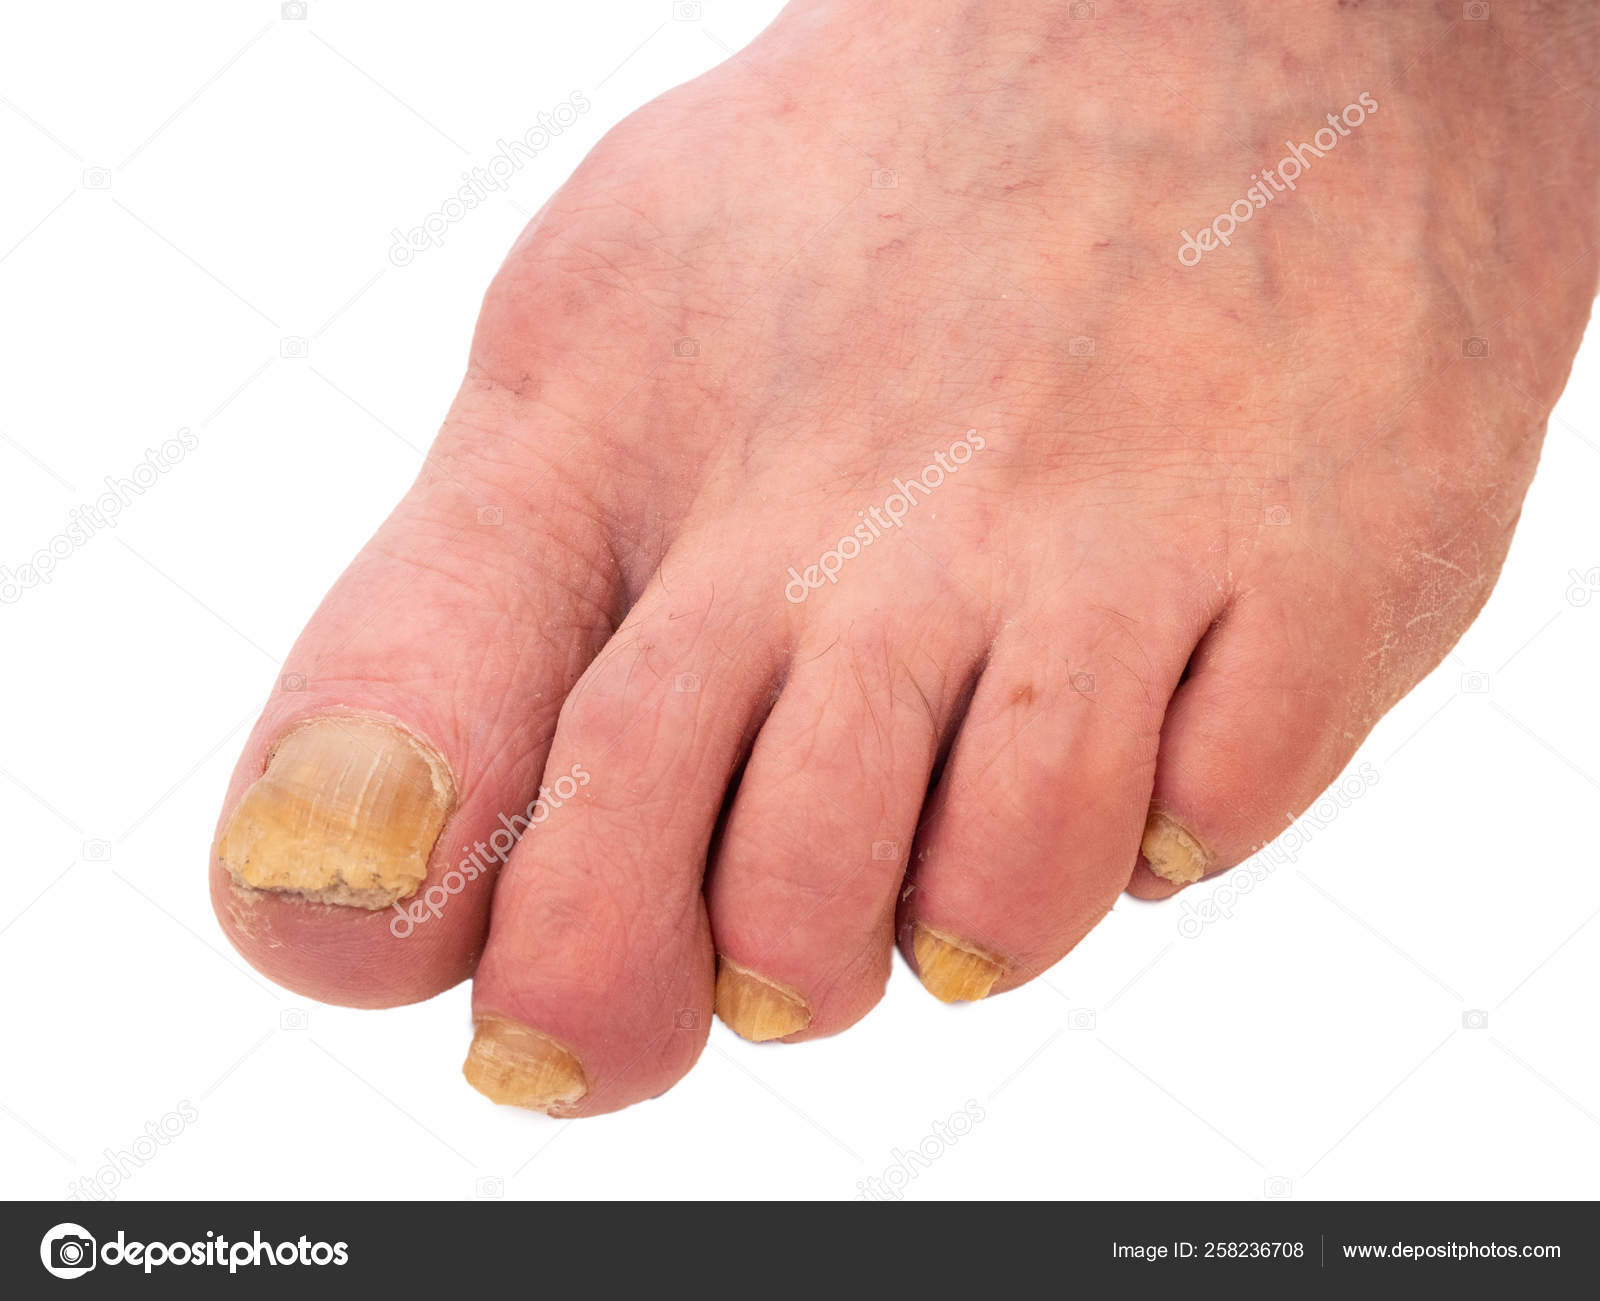 gomba skin nail foot